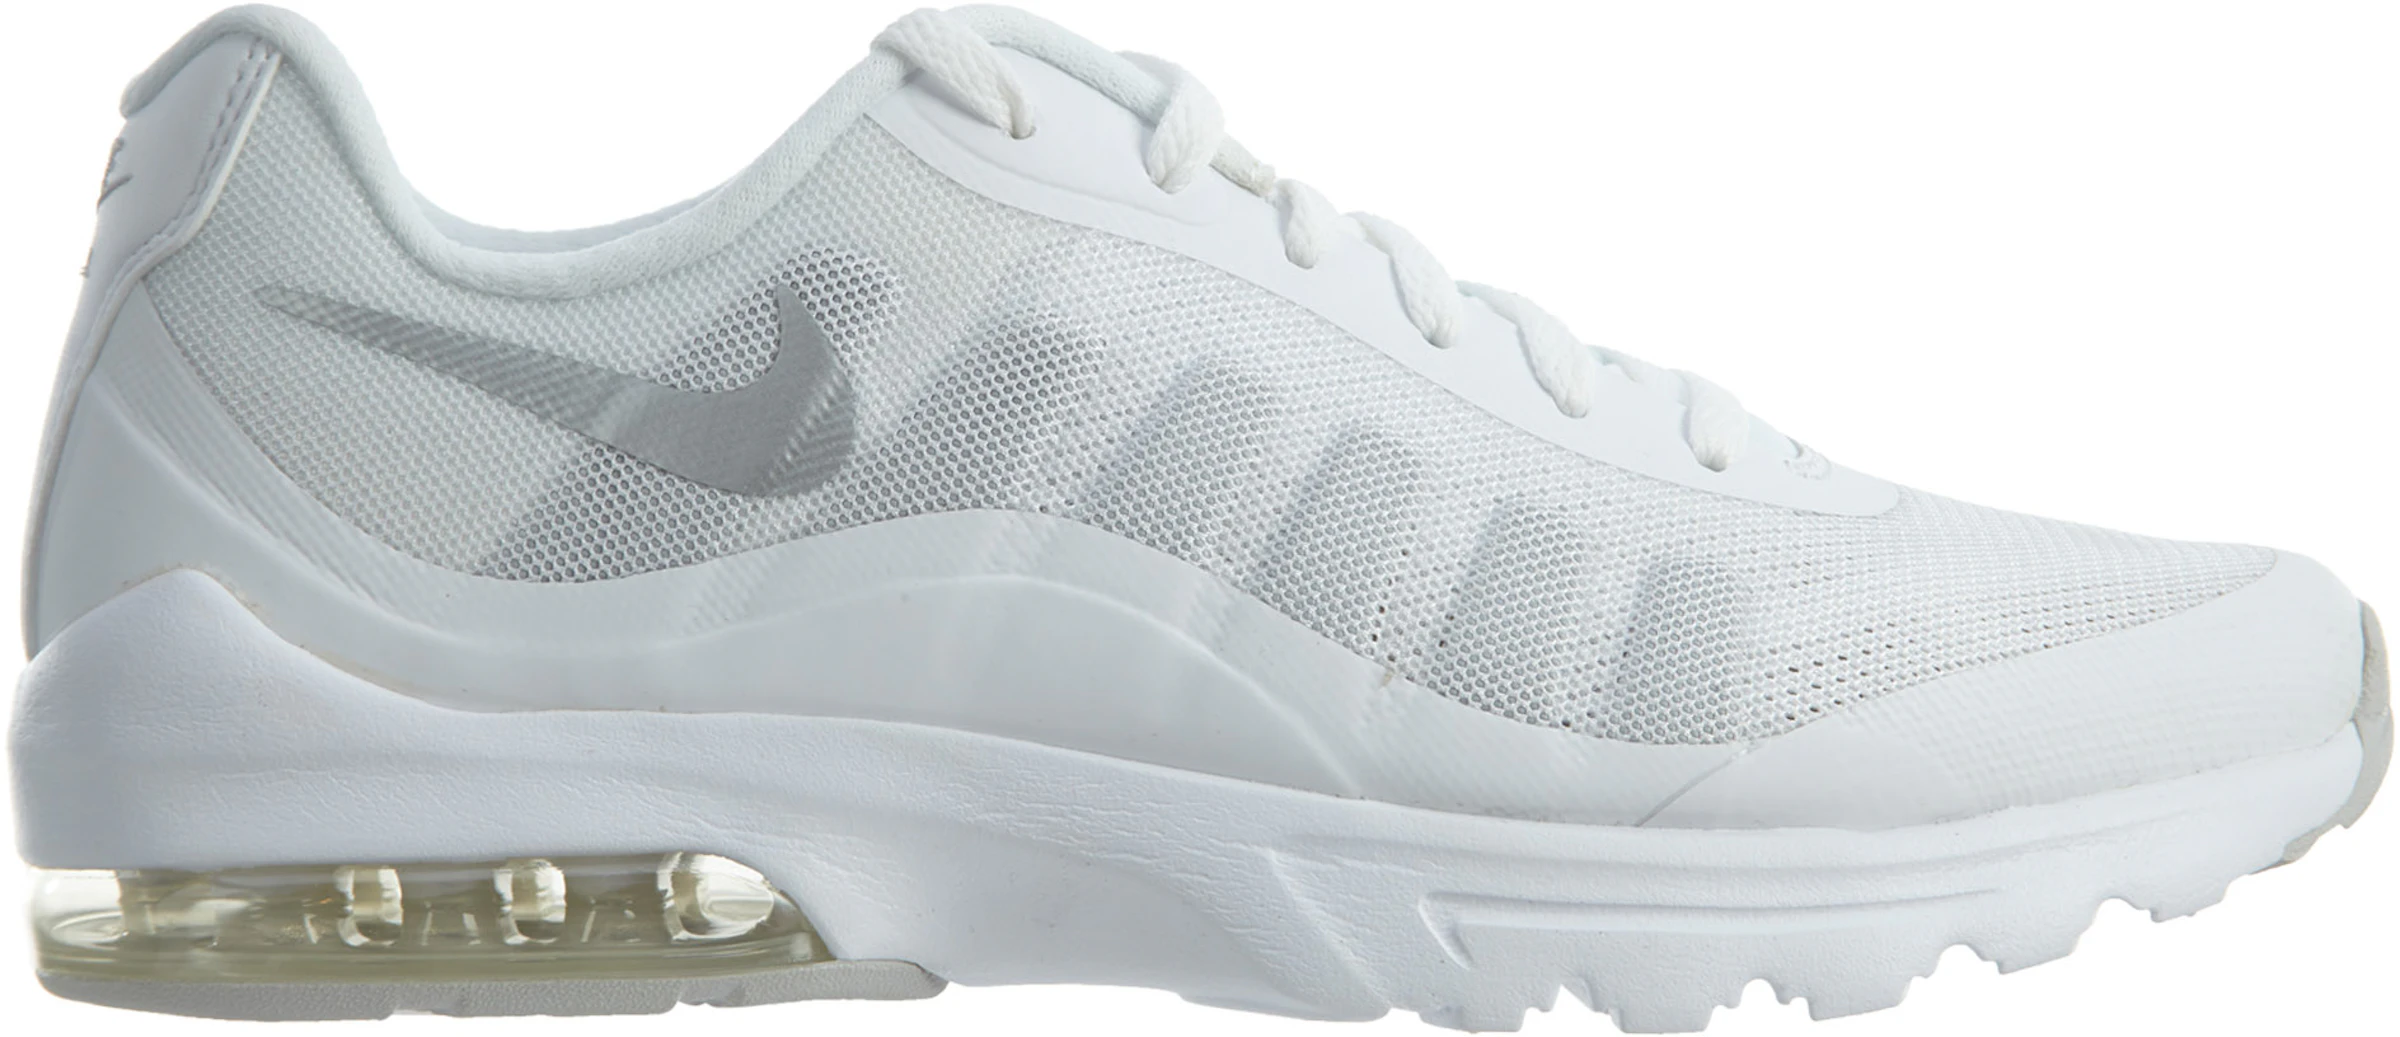 Nike Air White Silver (Women's) - 749866-100 - US